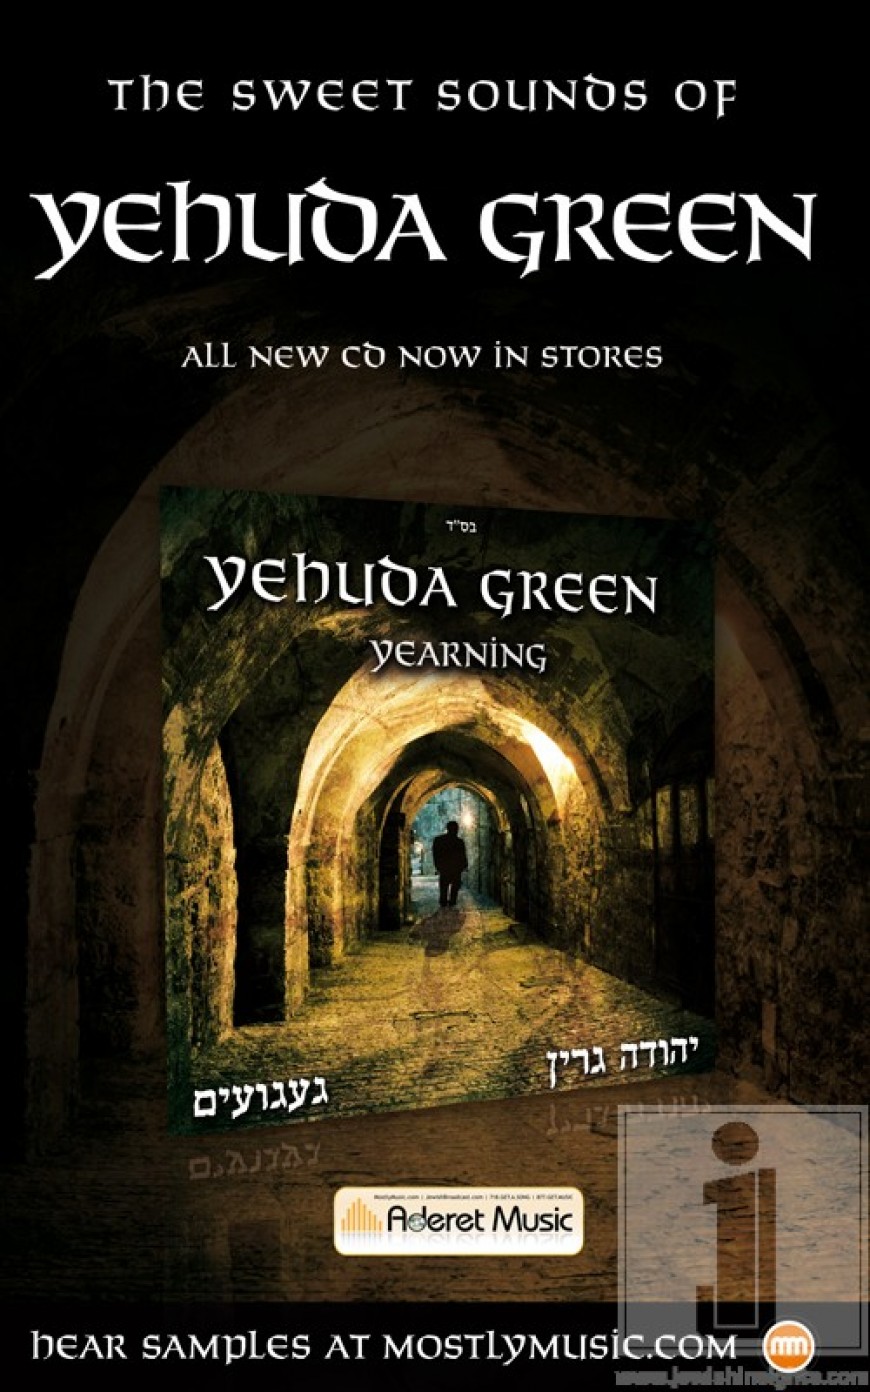 Yehuda Green – Yearning is Finally here!